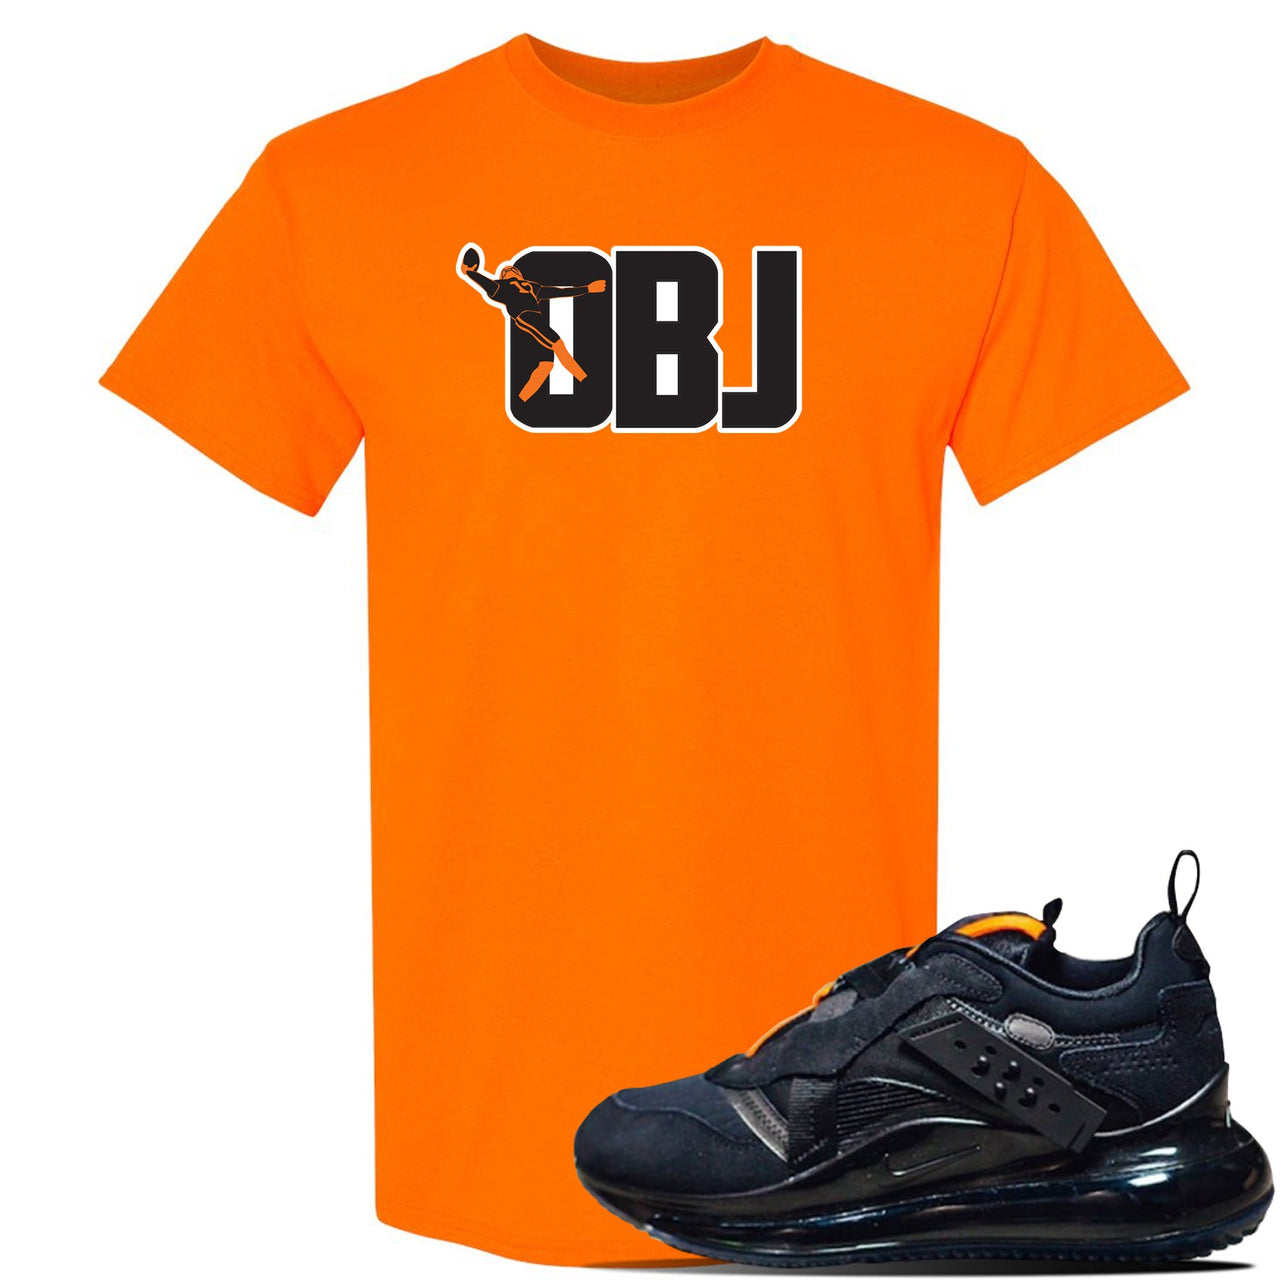 Air Max 720 OBJ Slip Sneaker Safety Orange T Shirt | Tees to match Nike Air Max 720 OBJ Slip Shoes | OBJ